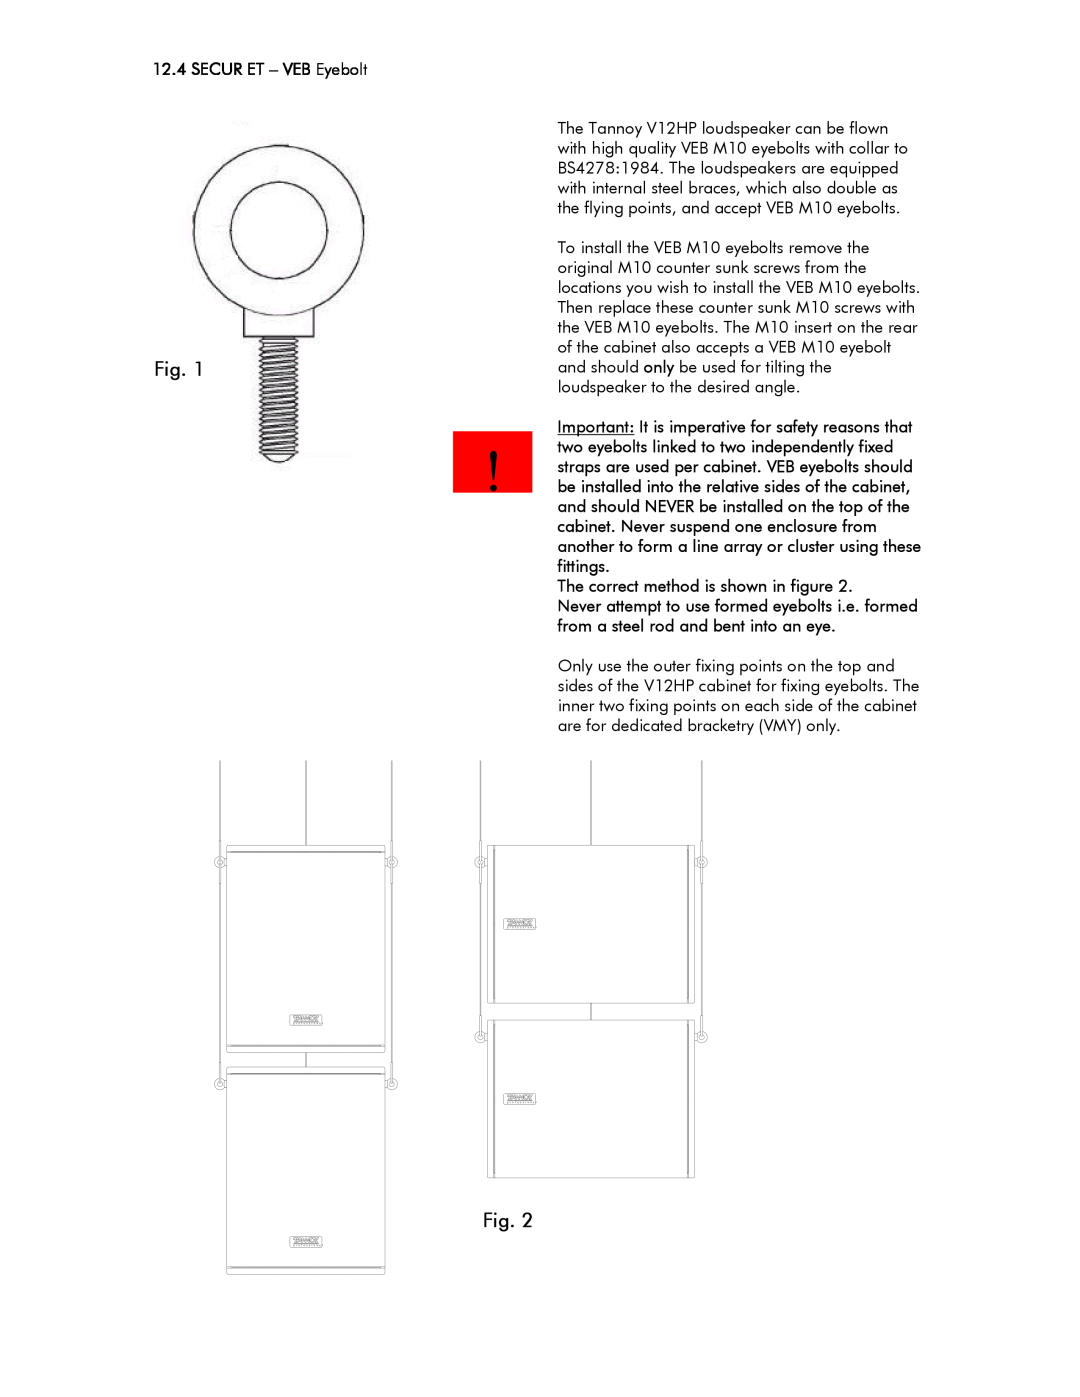 Tannoy V12 HP user manual SECUR ET - VEB Eyebolt, The correct method is shown in figure 